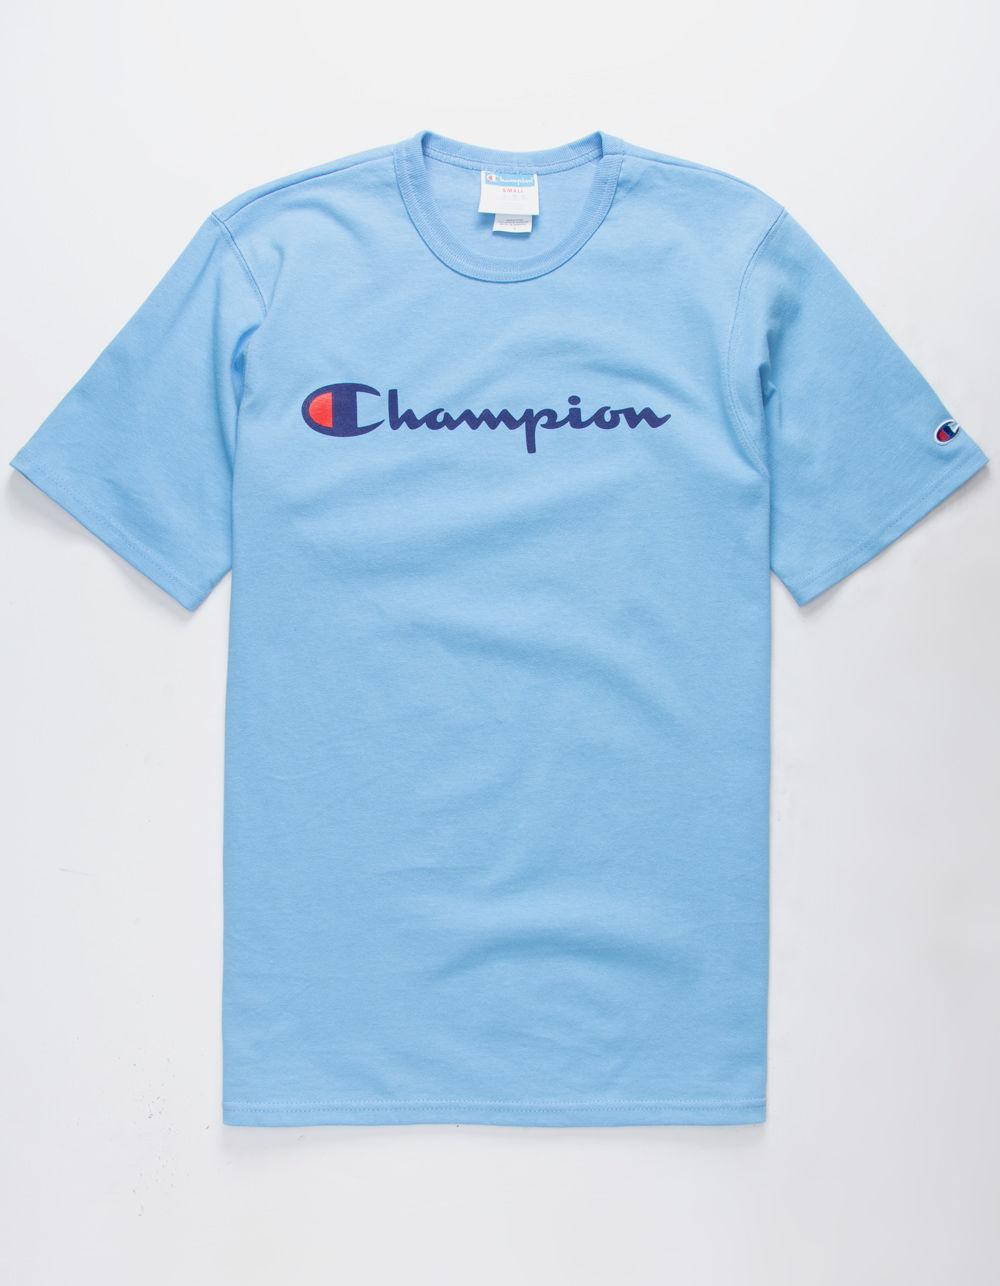 sky blue champion sweatshirt